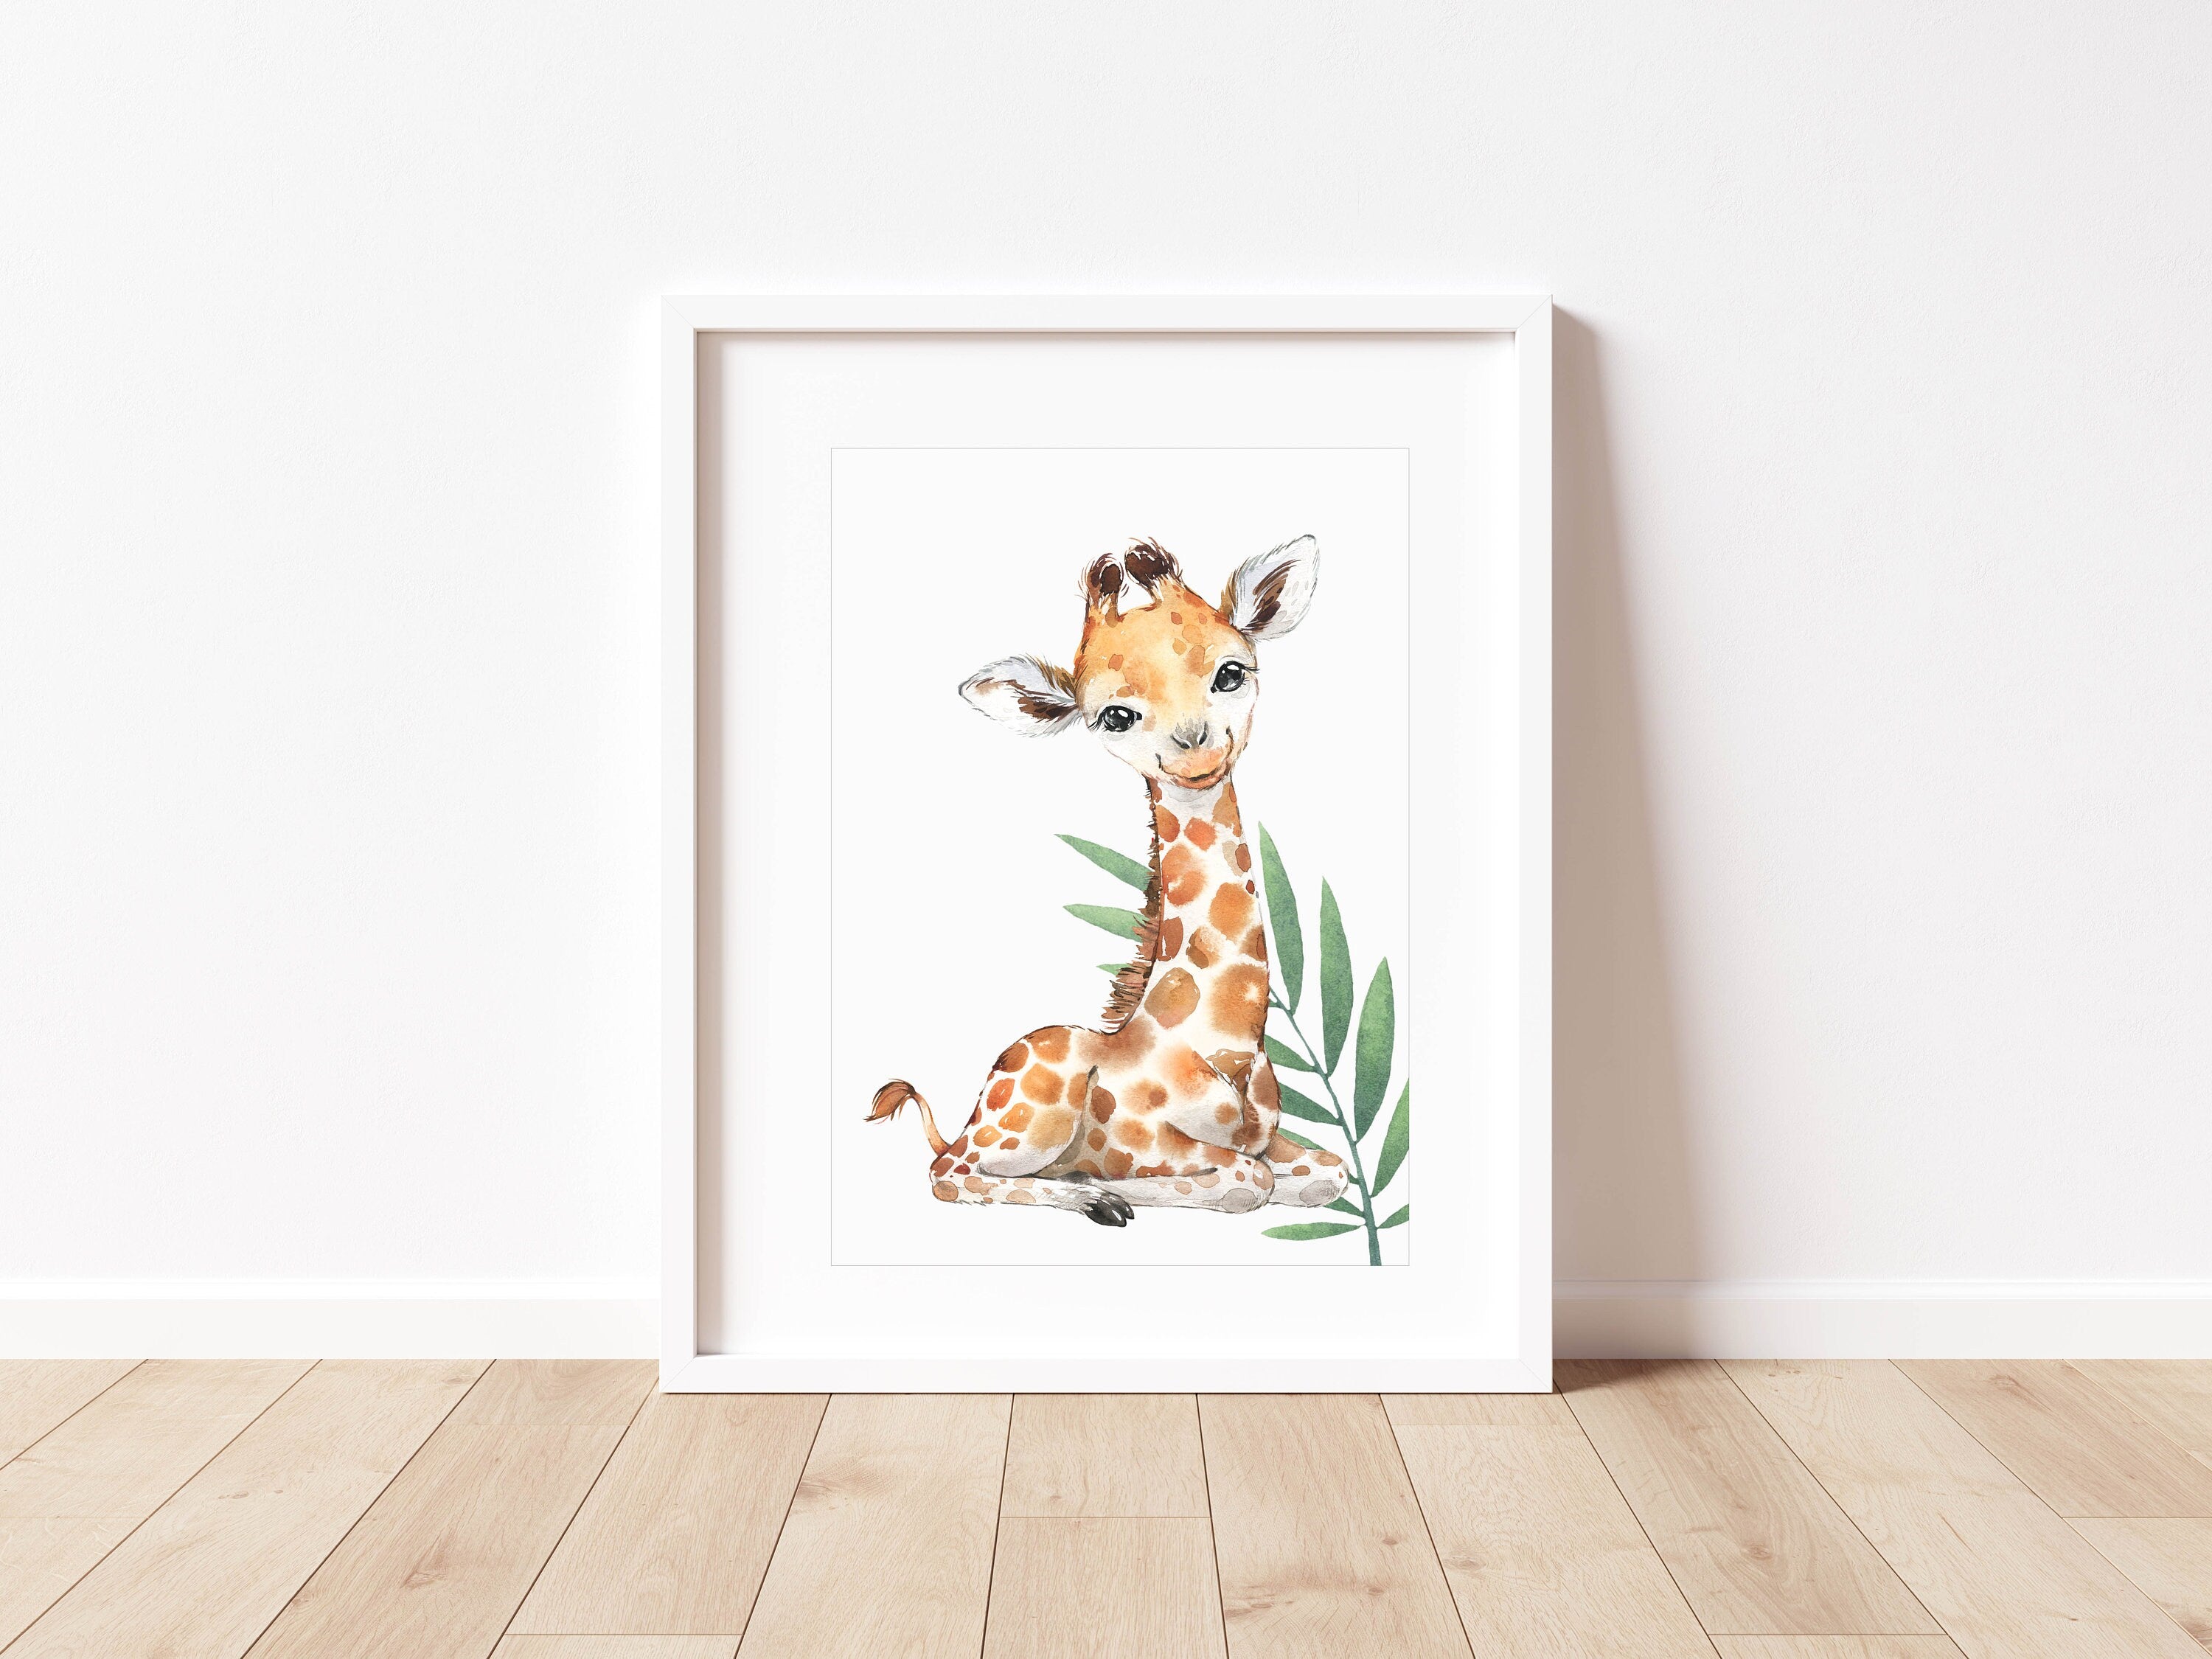 Jungle Animals Nursery Decor - Safari Nursery Prints -Baby Wall Art - Nursery Decor - Jungle Theme - Elephant Giraffe Zebra Lion - Safari